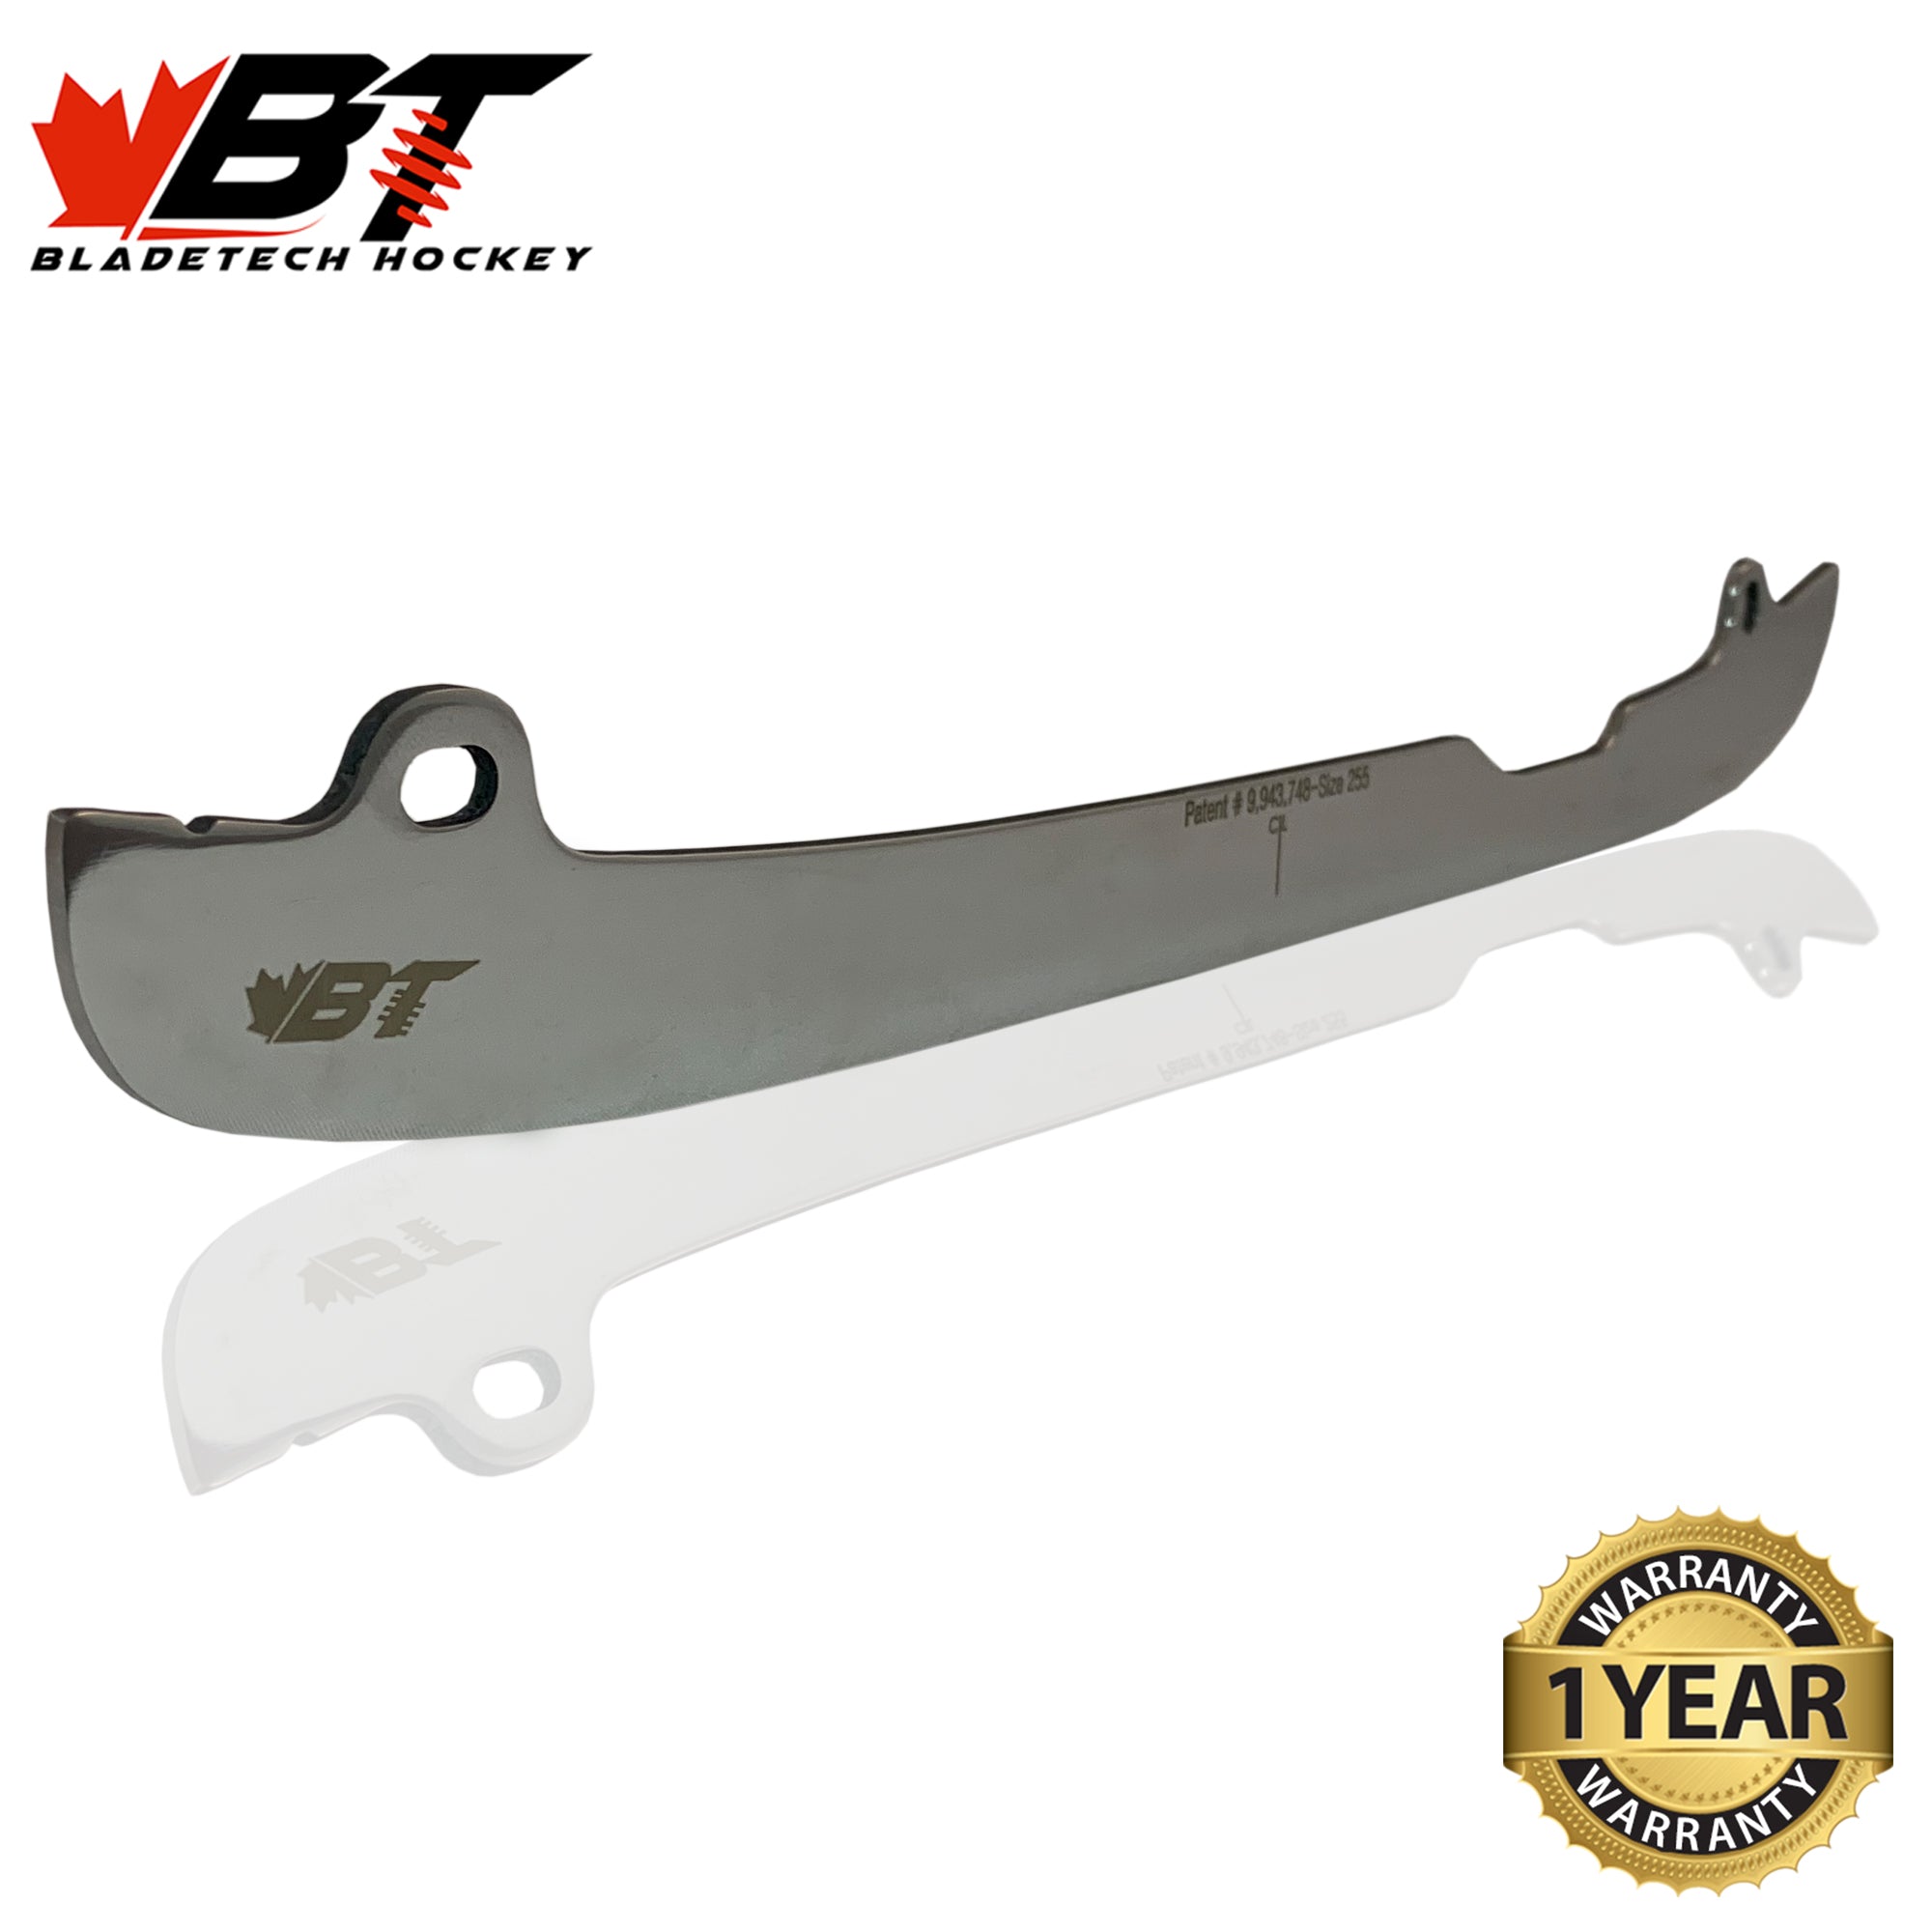 Bladetech Mirror Stainless Steel Blades - SB +4.0 - Tydan Specialty Blades Inc. (Canada)